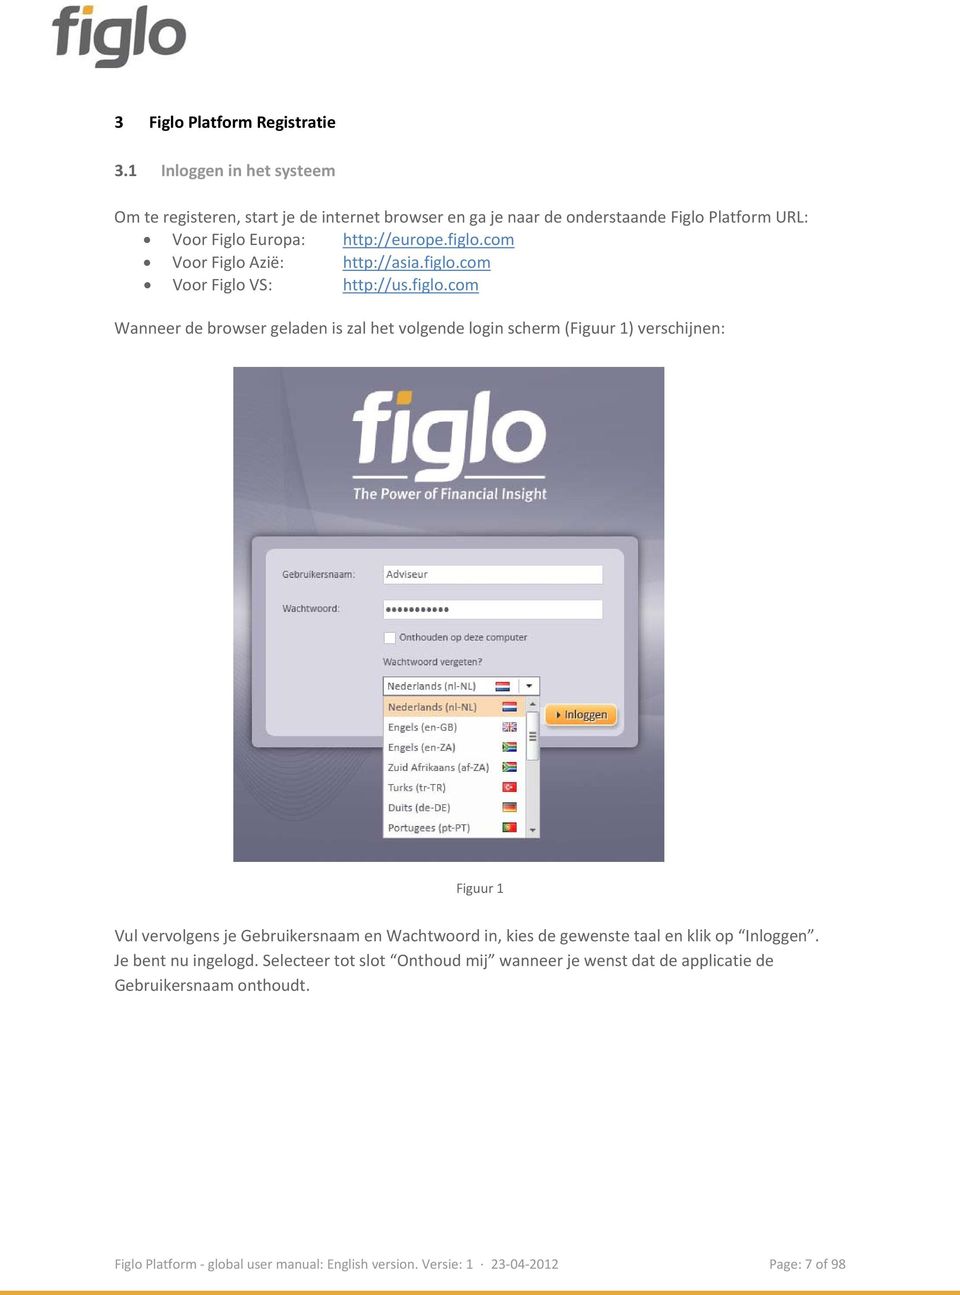 com Voor Figlo Azië: http://asia.figlo.